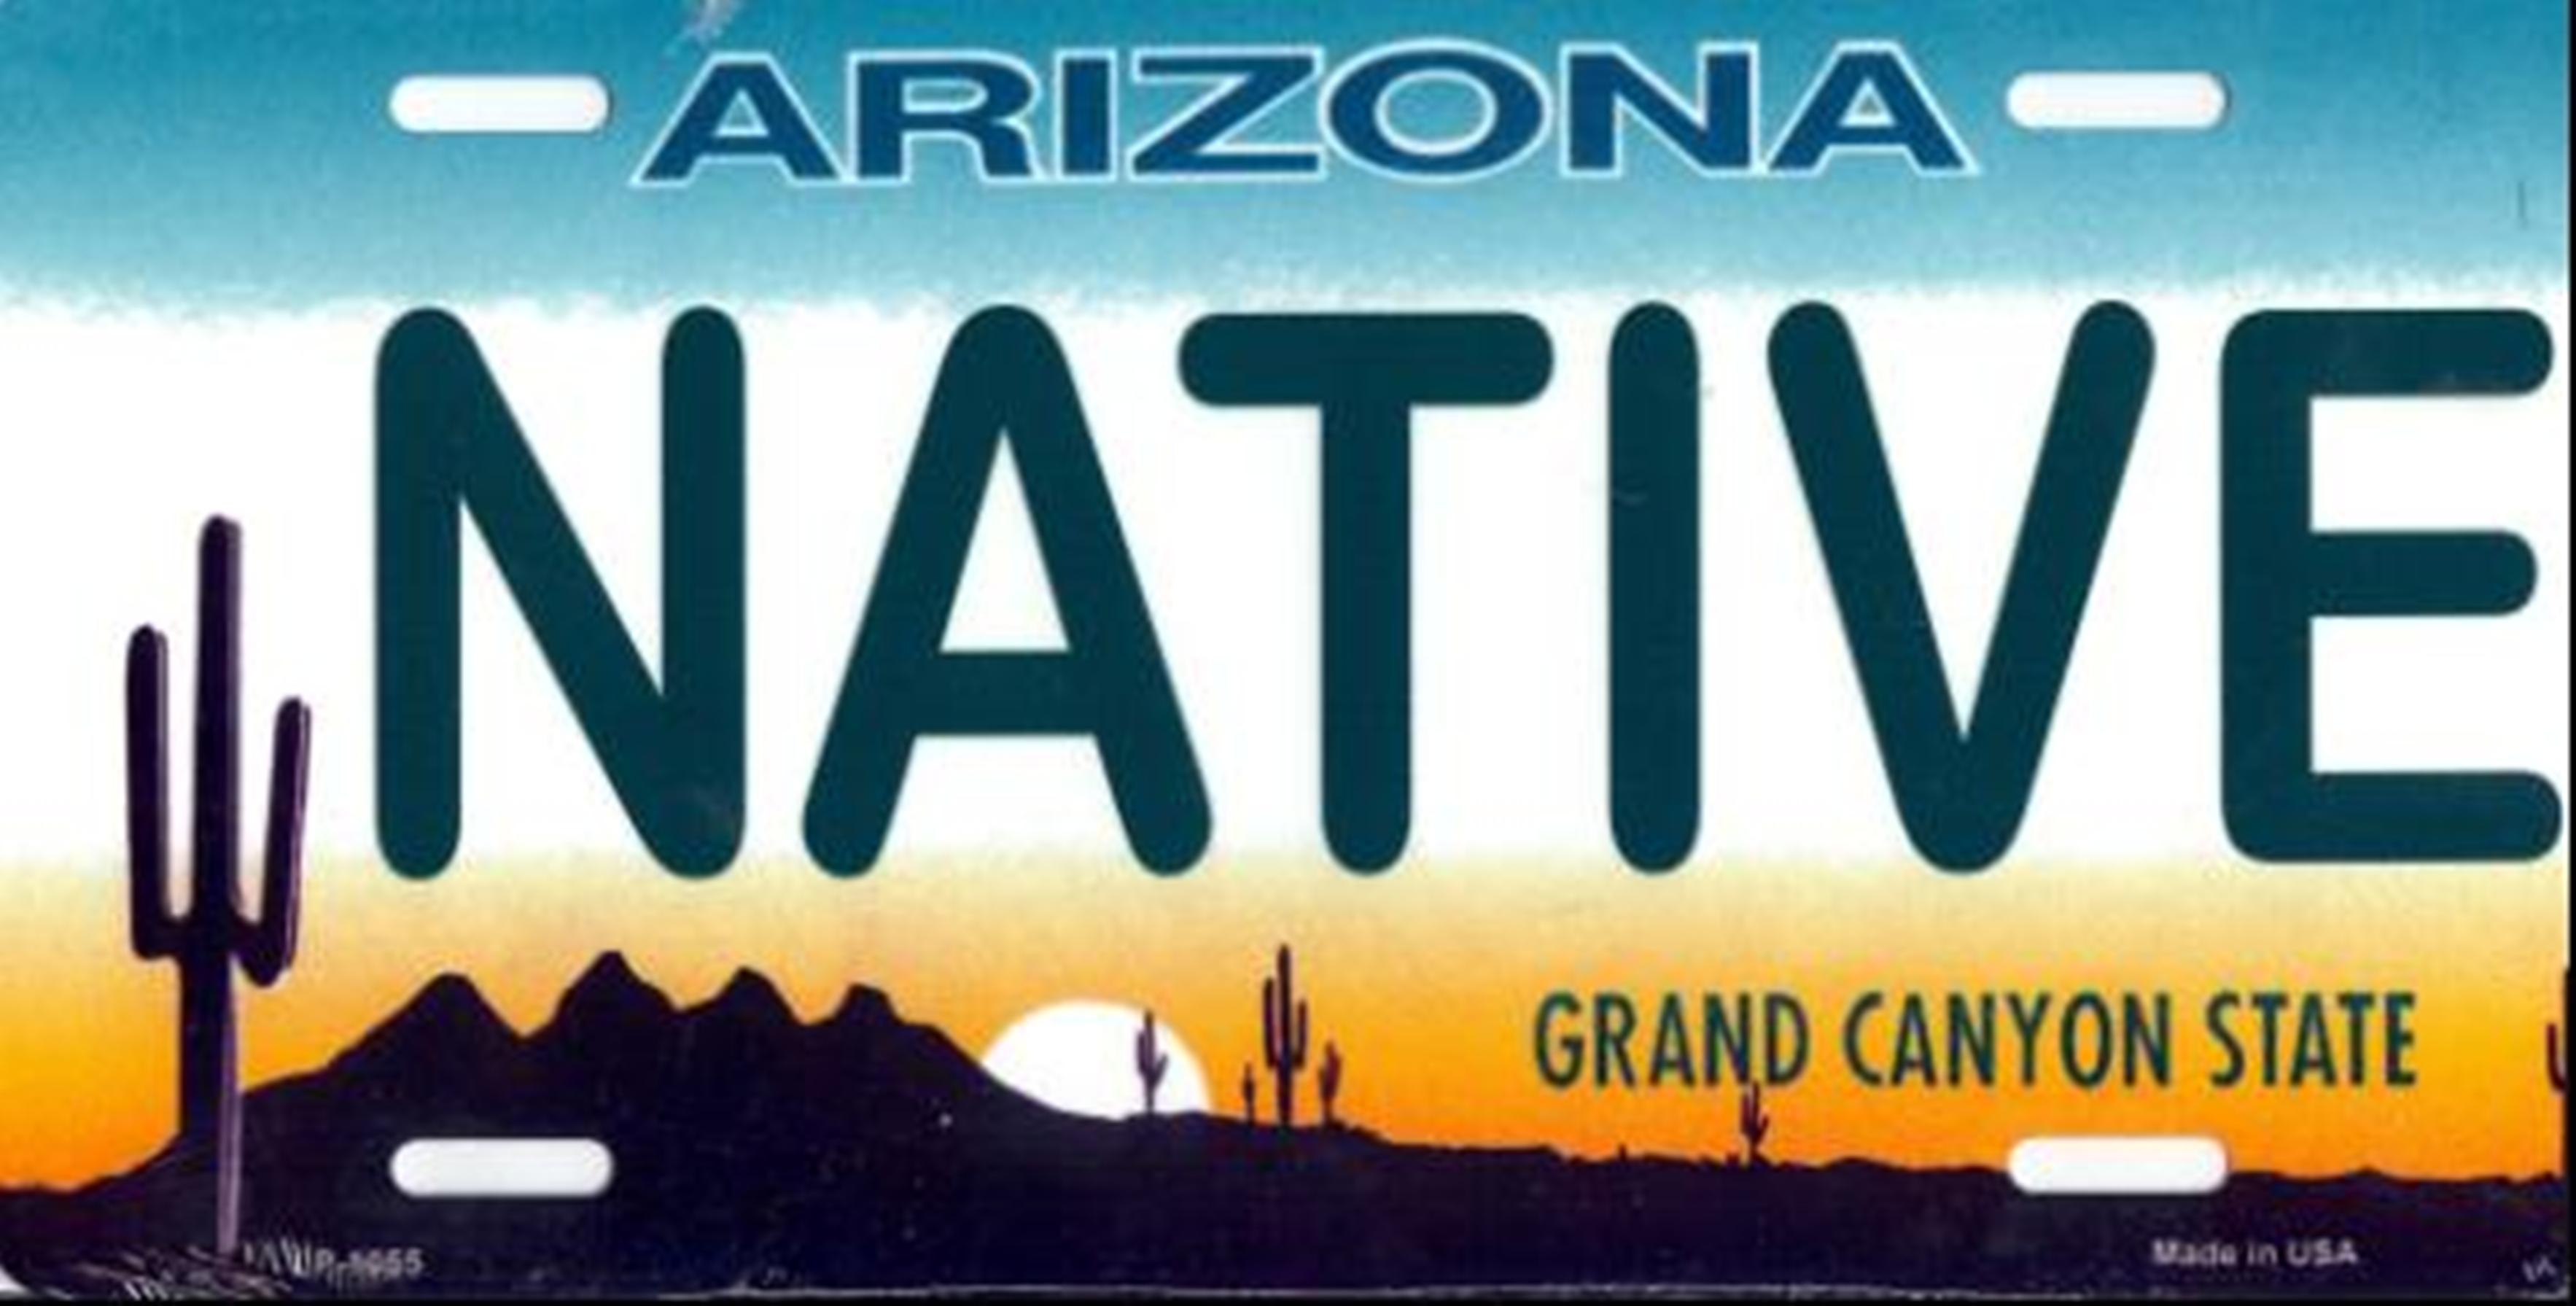 Arizona Native LICENSE PLATE